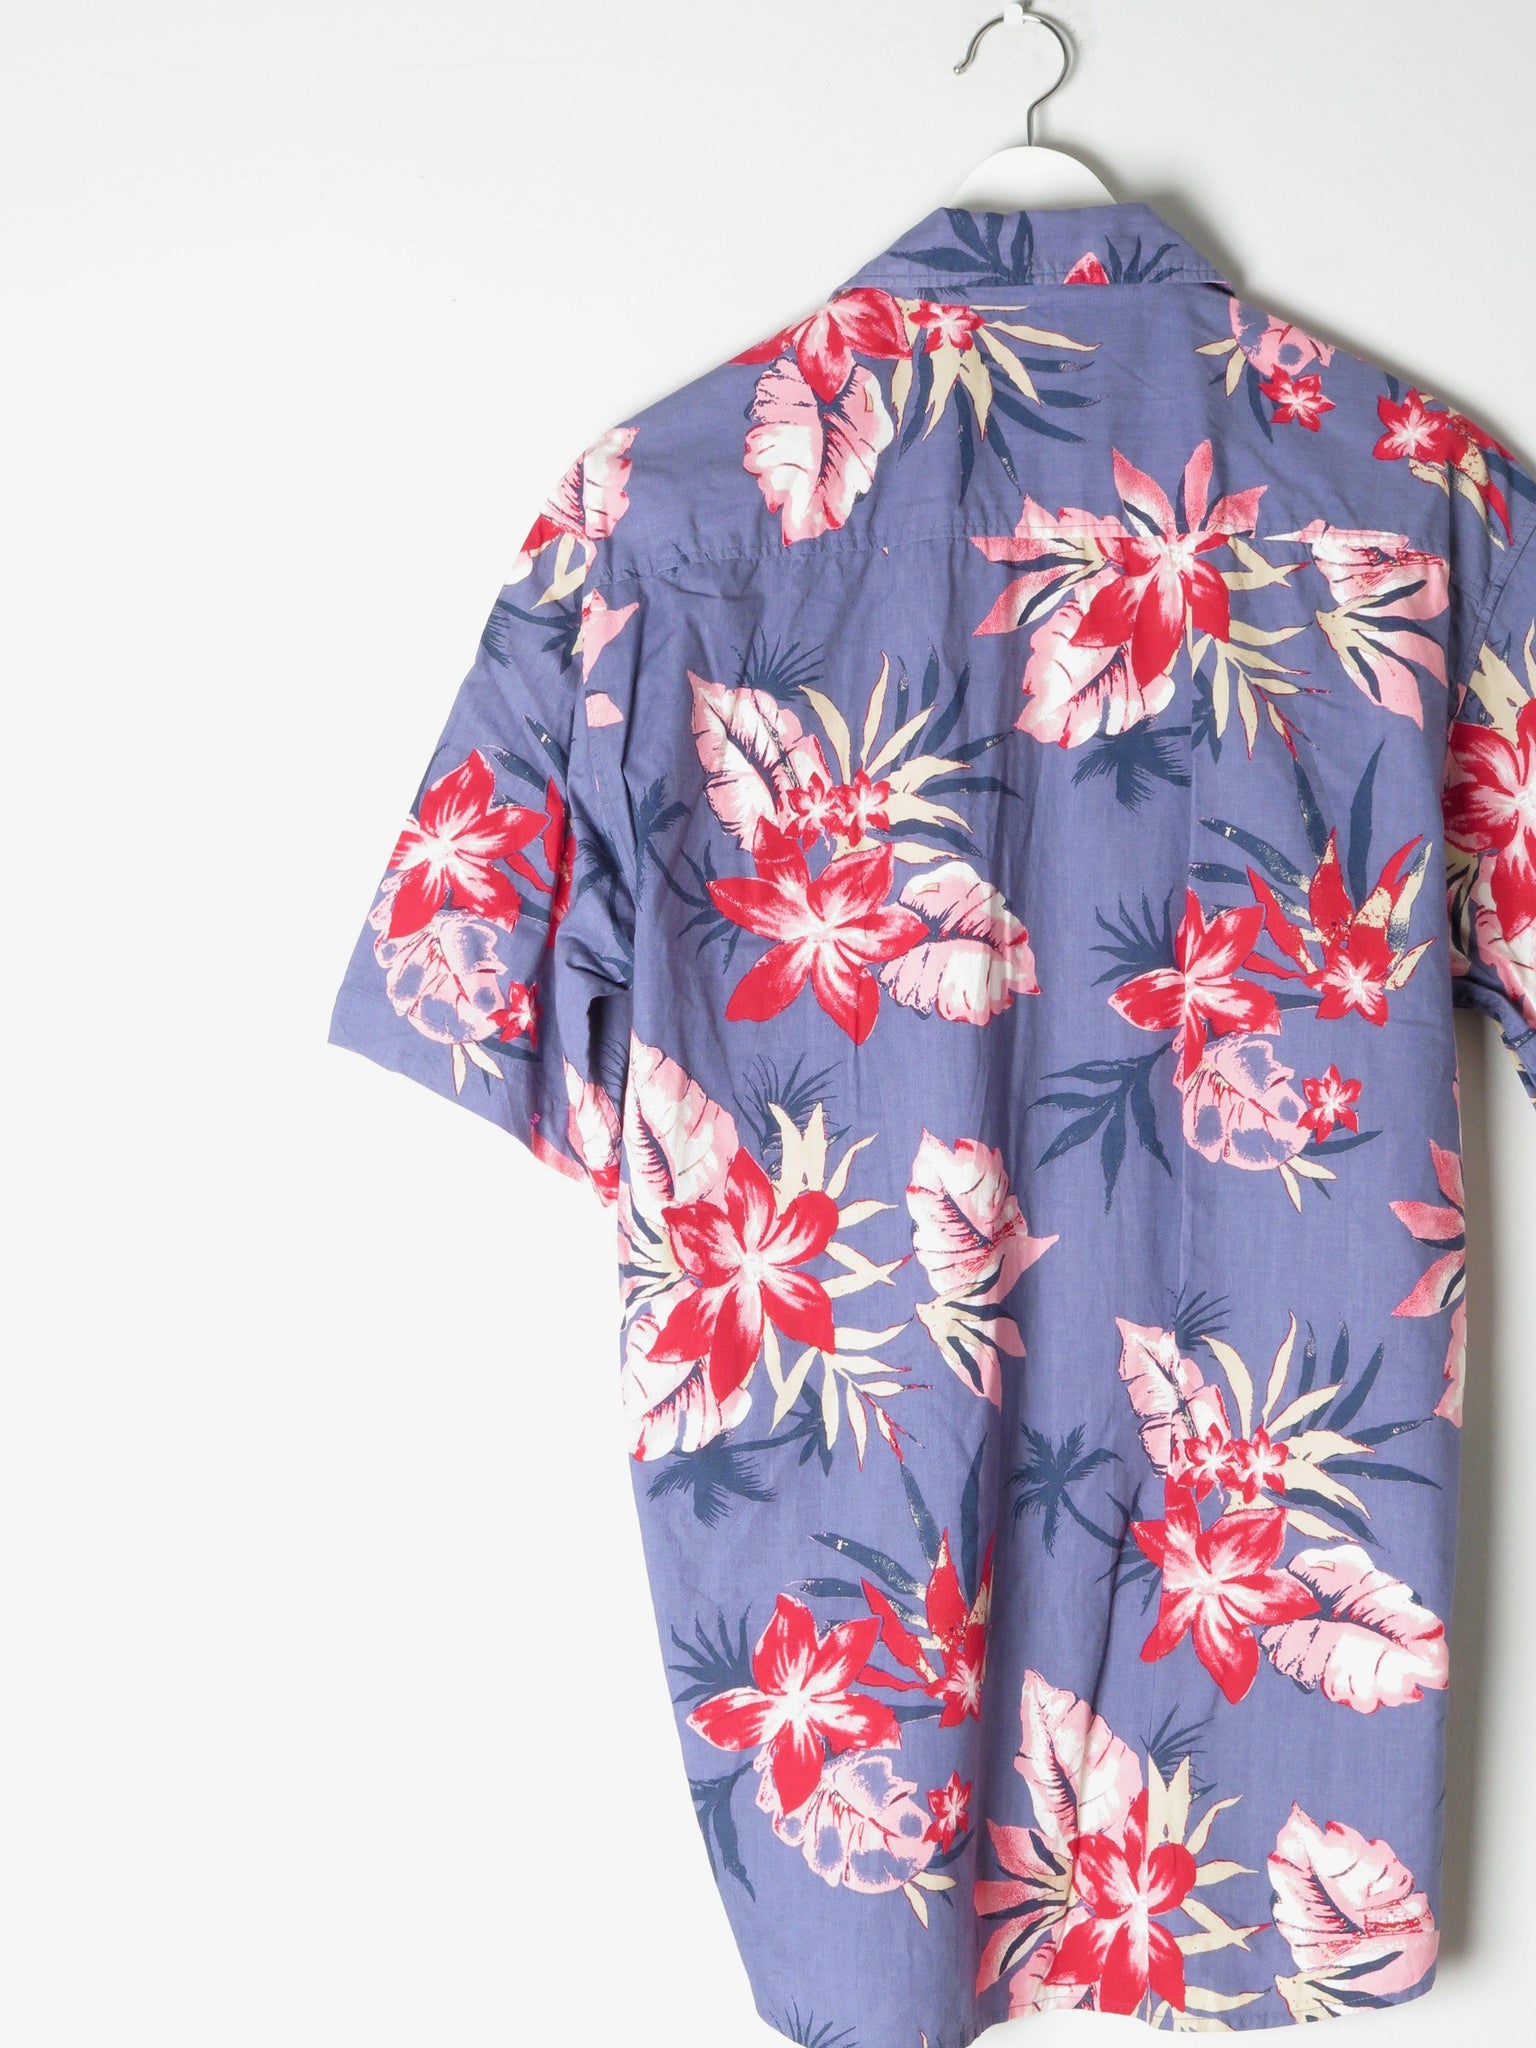 Men's Blue Hawaiian Shirt M - The Harlequin